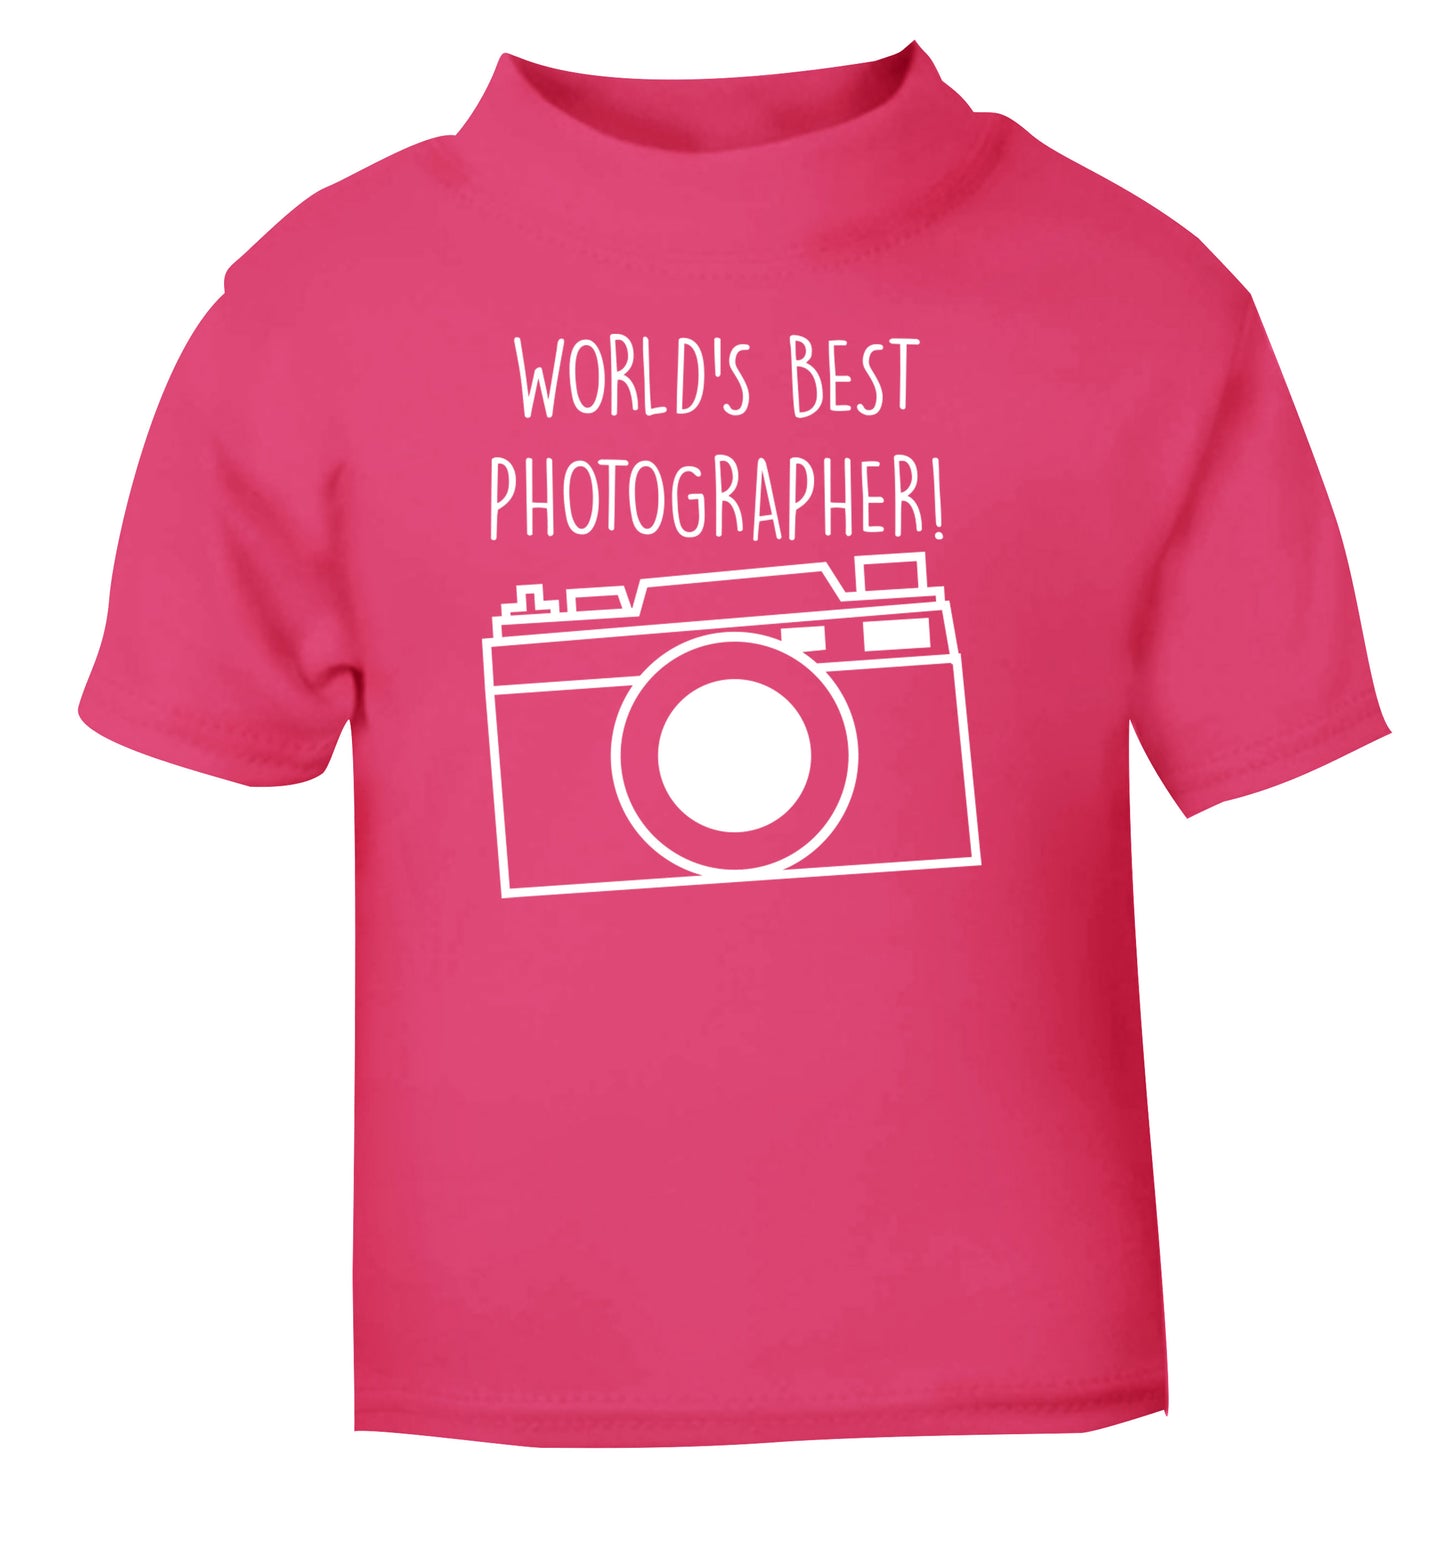 Worlds best photographer  pink Baby Toddler Tshirt 2 Years